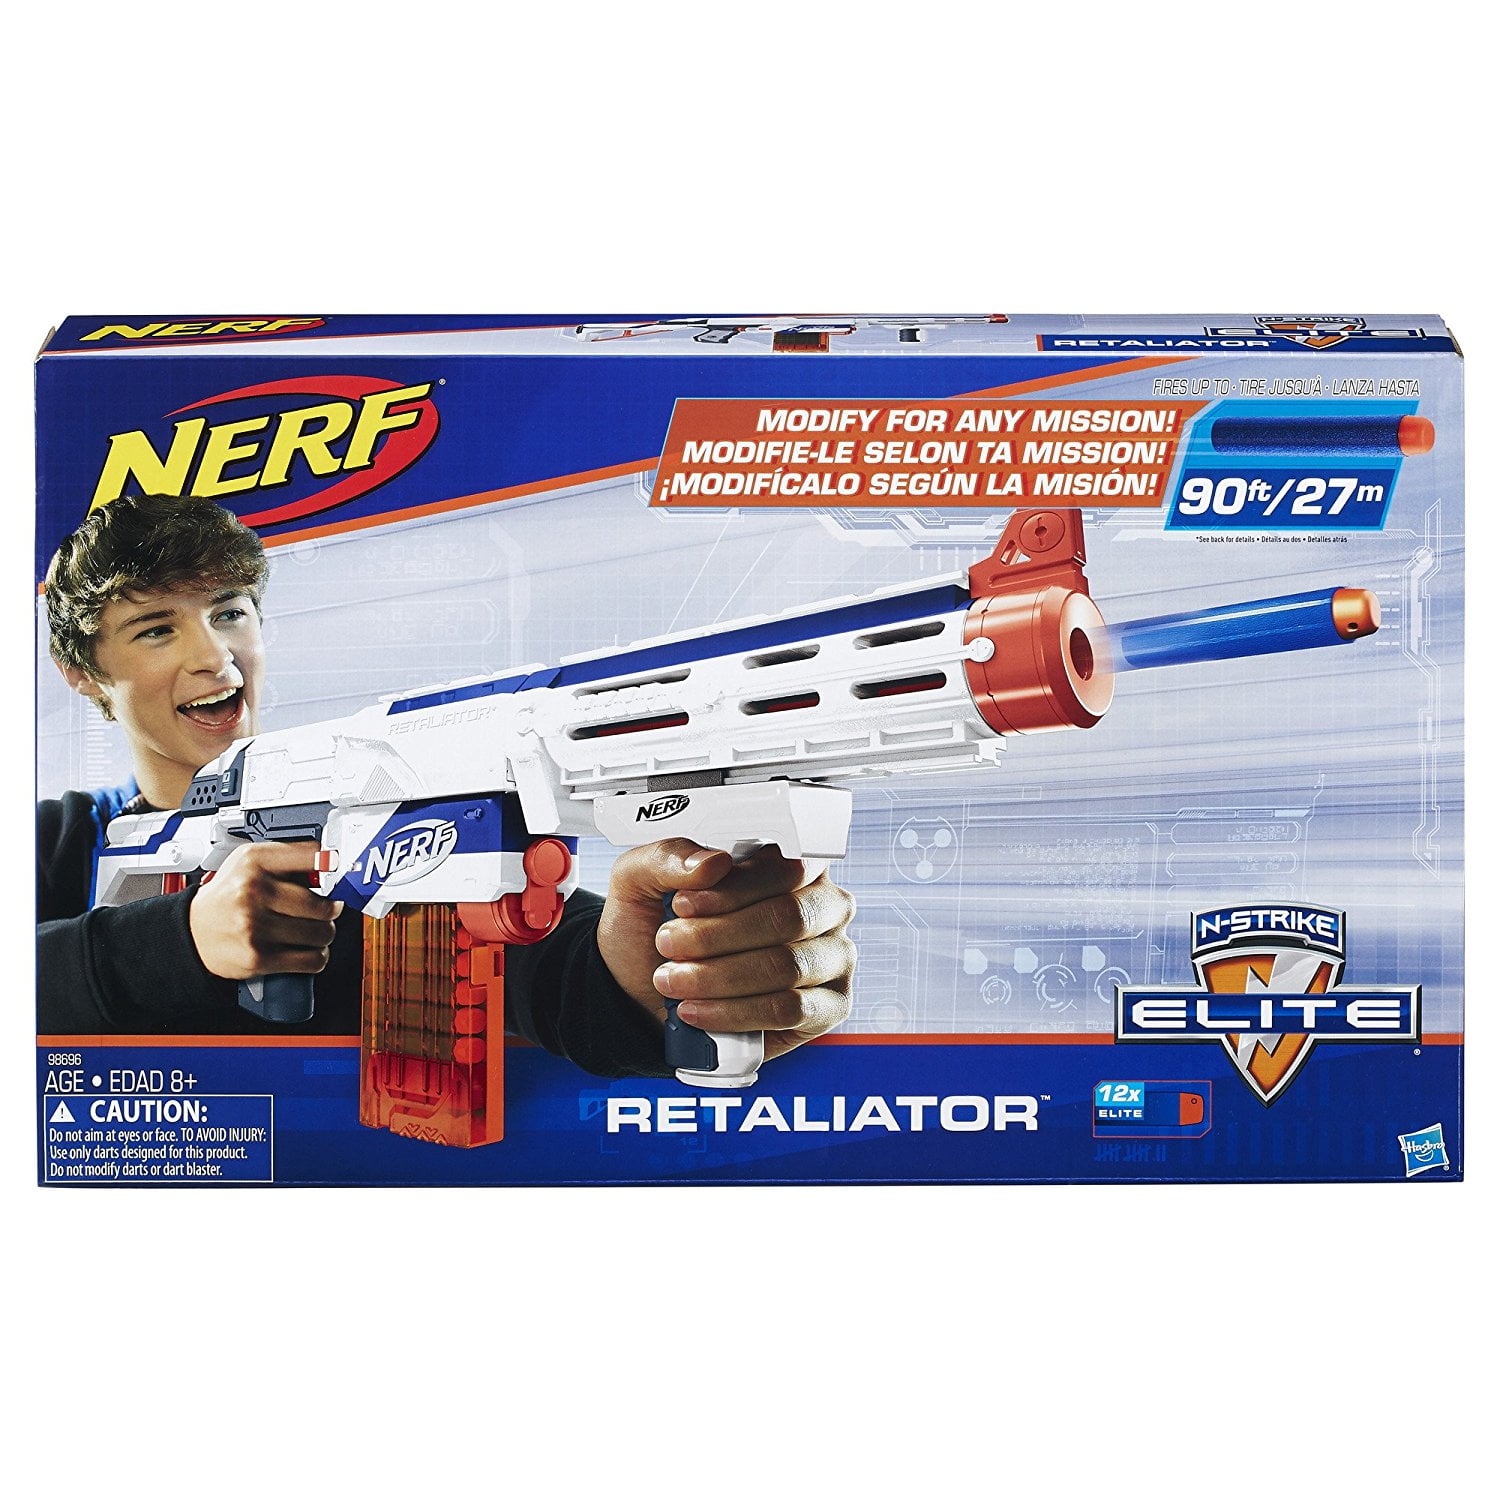 NERF N-Strike Elite Retaliator Blaster 98696F01 for sale online 